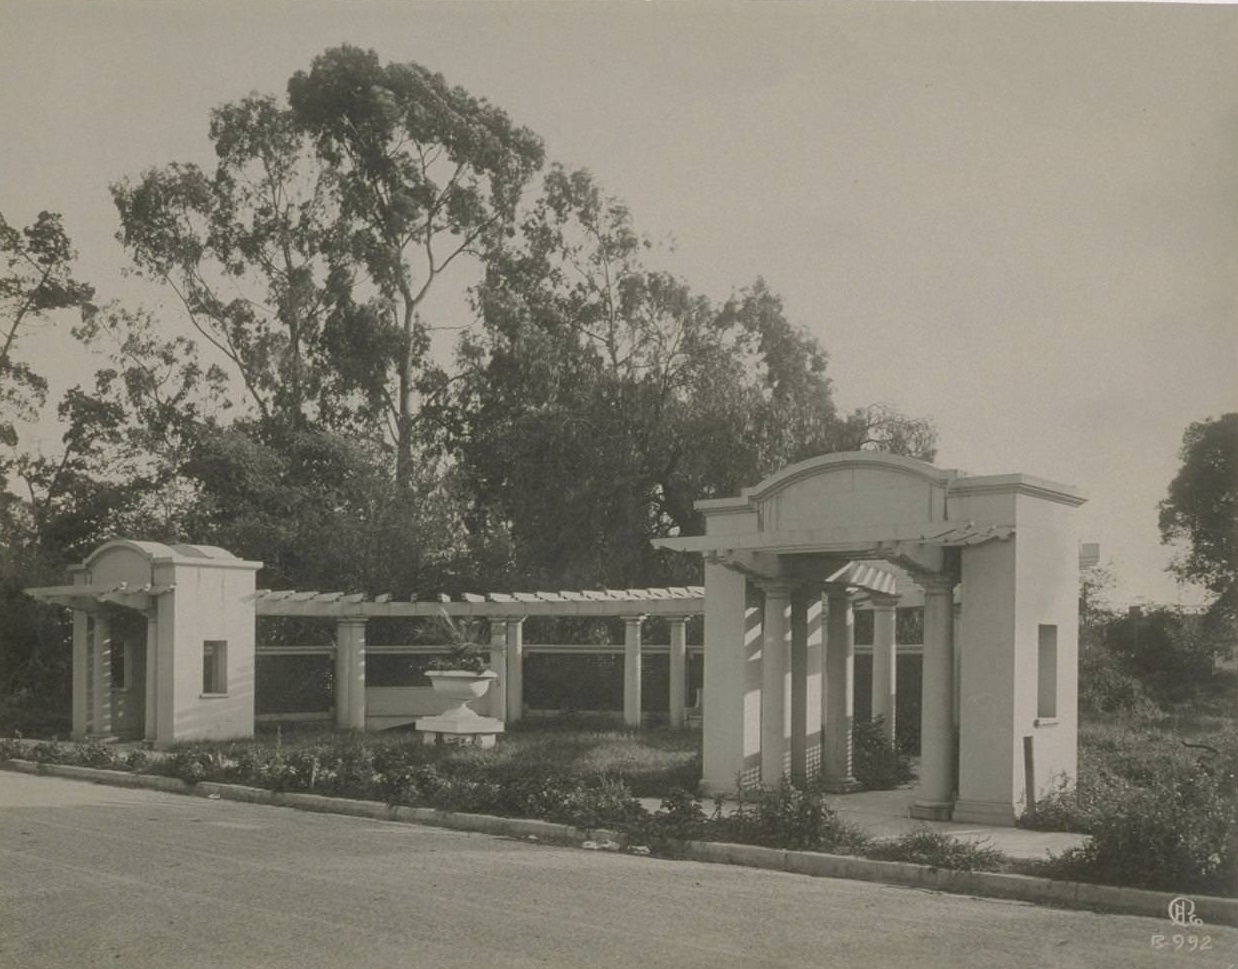 Pergola, Mosswood Park, Oakland, 1930s